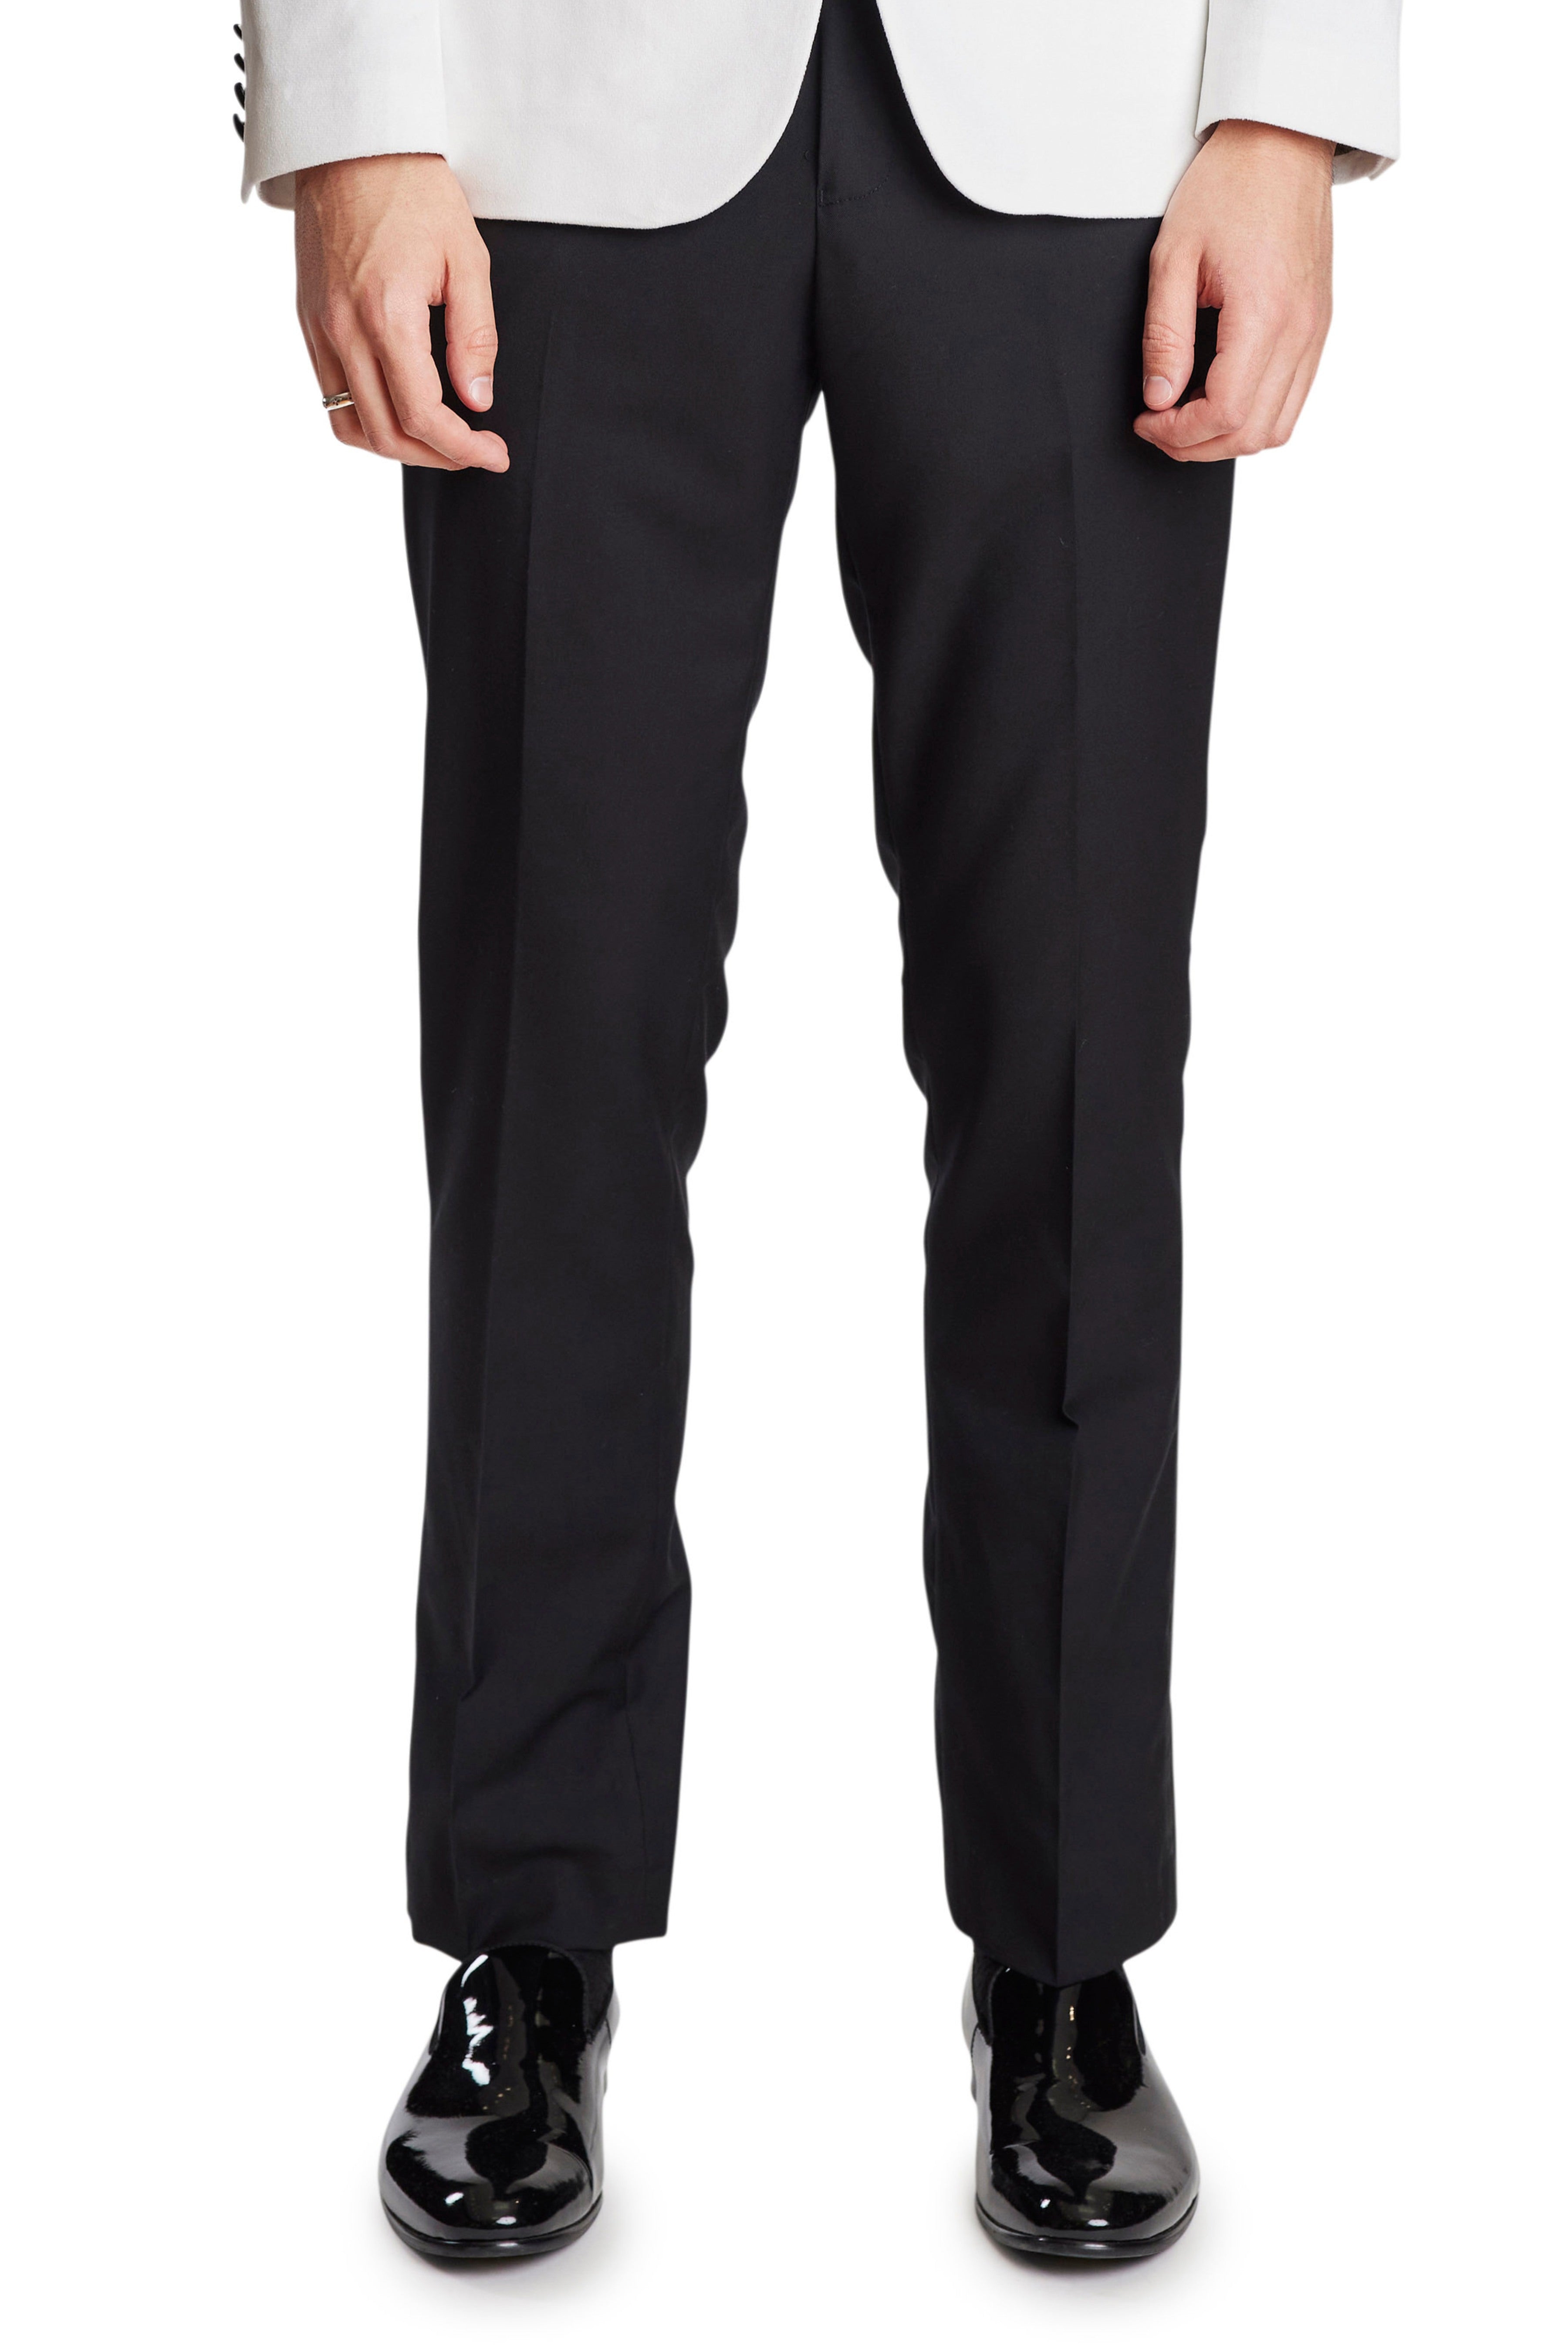 Men's Satin Stripe Black Polyester Classic Fit Plain Front T